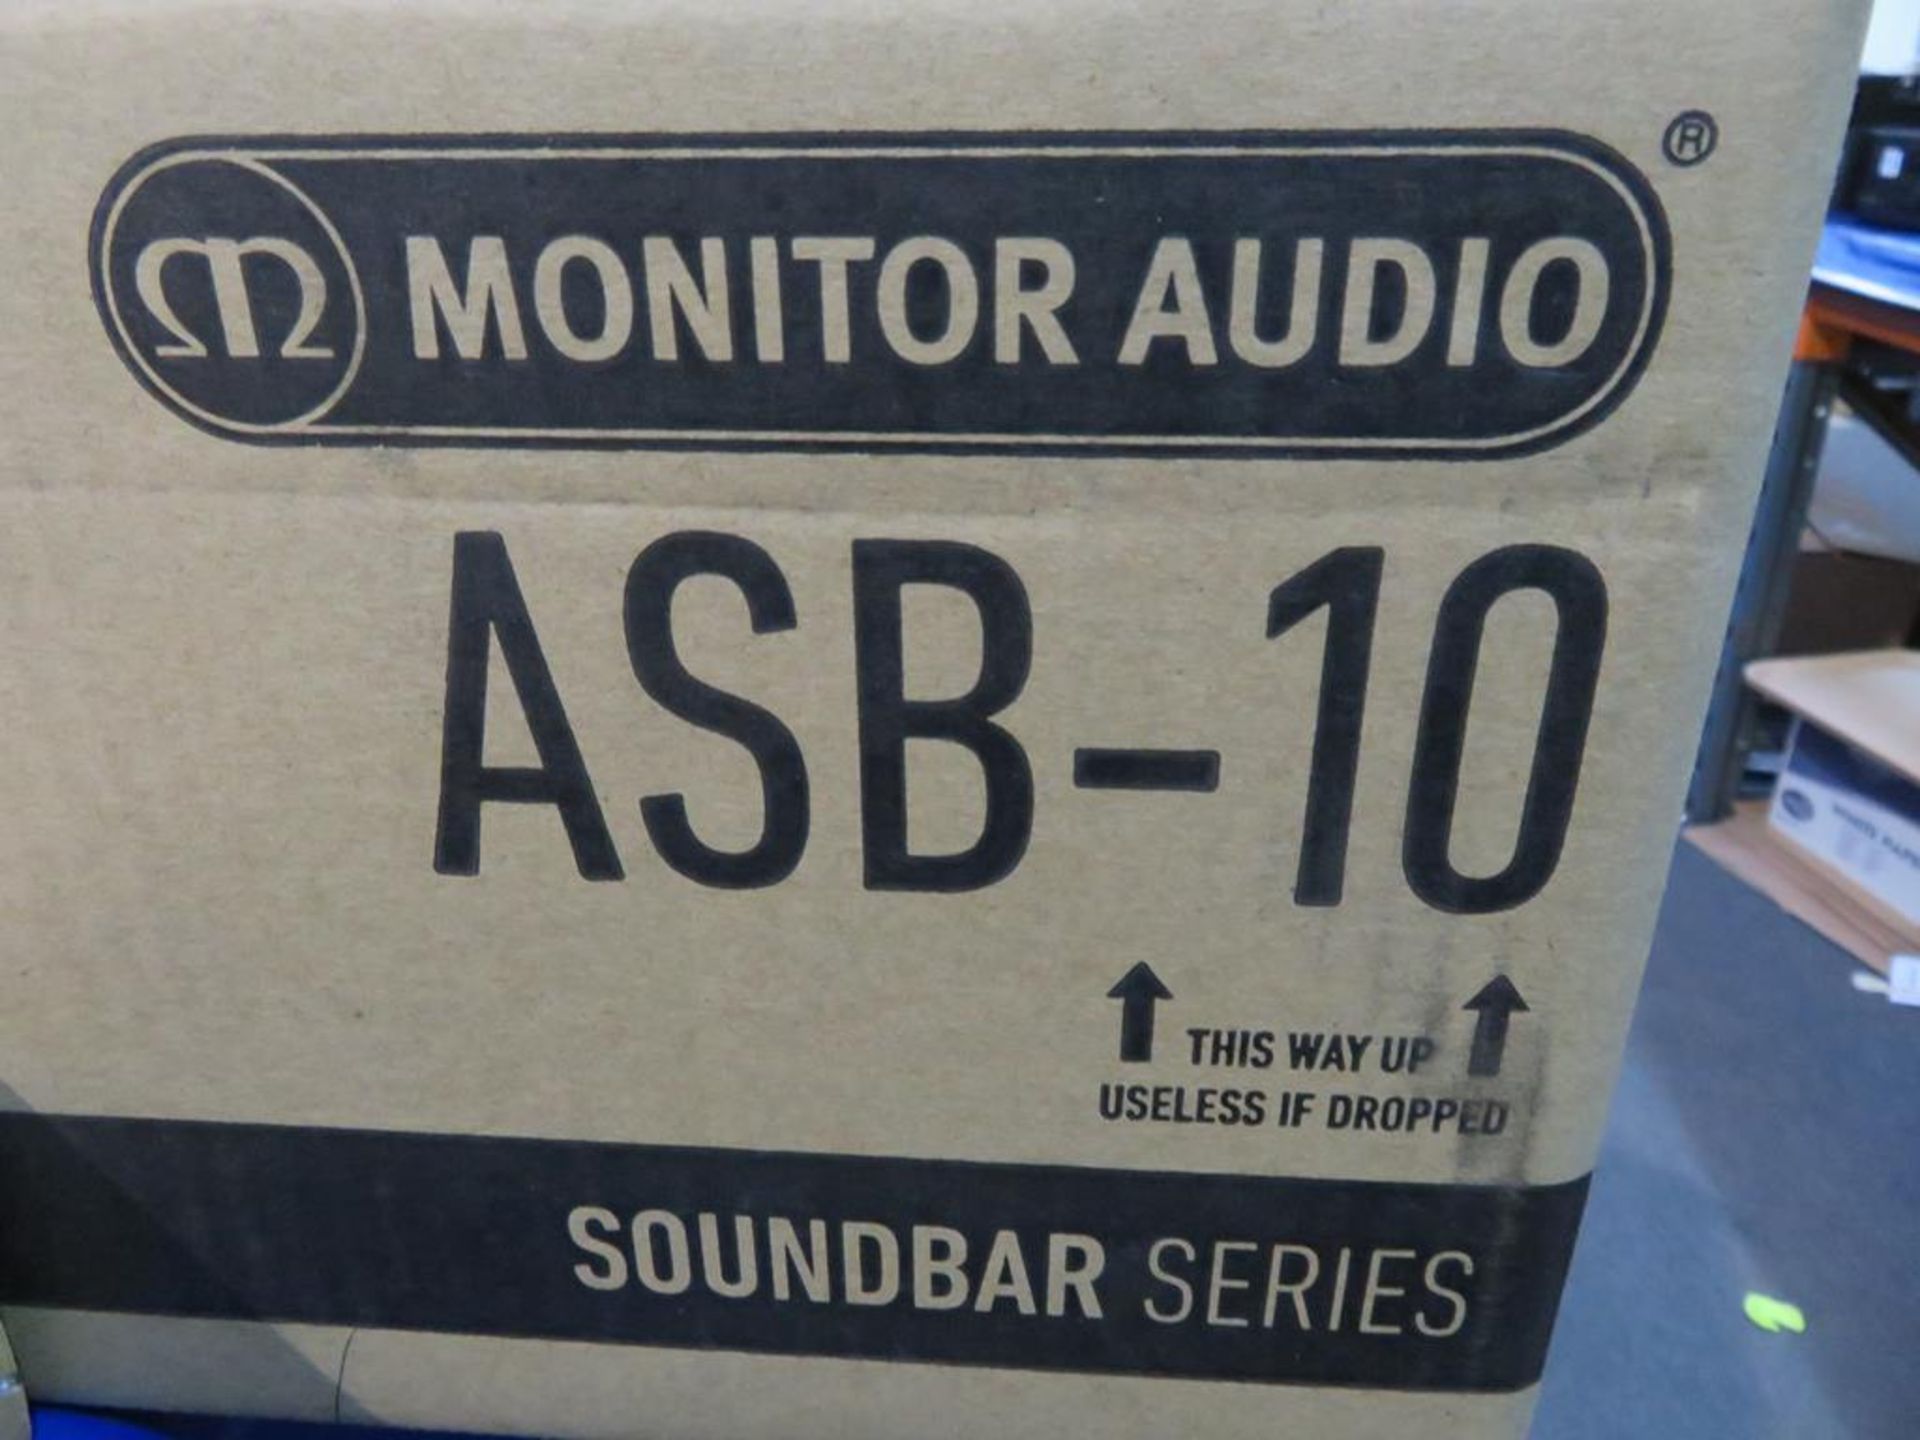 Monitor Audio ASB-10 Soundbar - Image 2 of 3